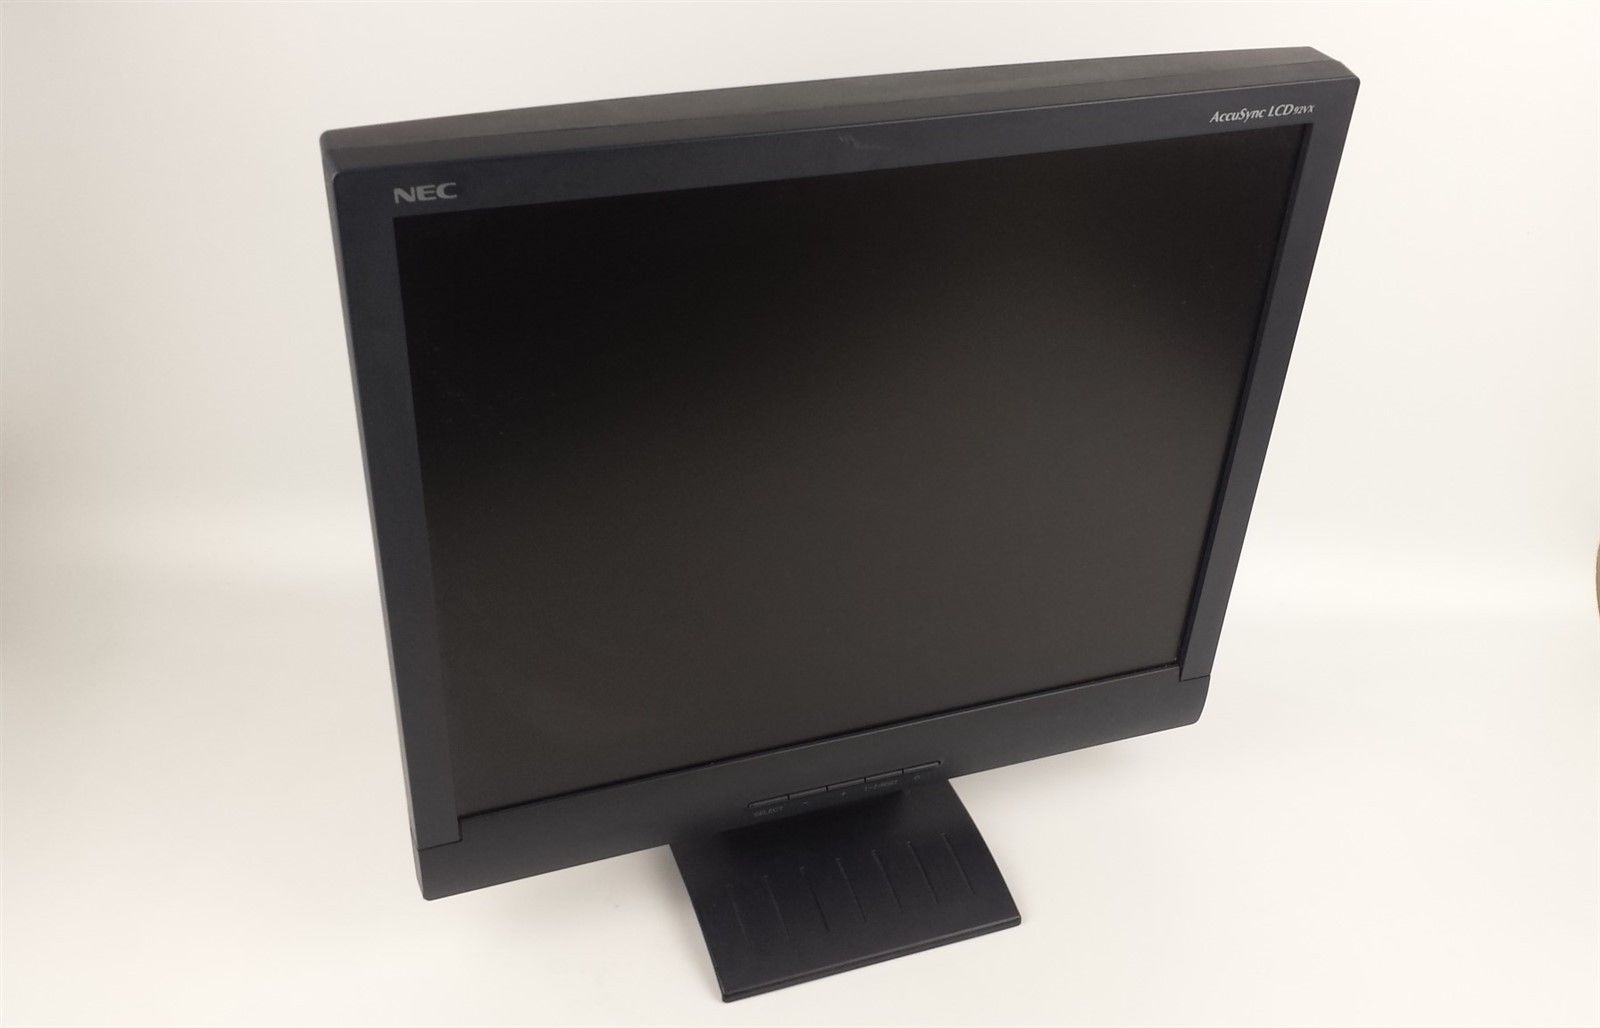 NEC AccuSync LCD92VX Flat Screen LCD Computer Monitor 19" w/ Power & VGA Cord